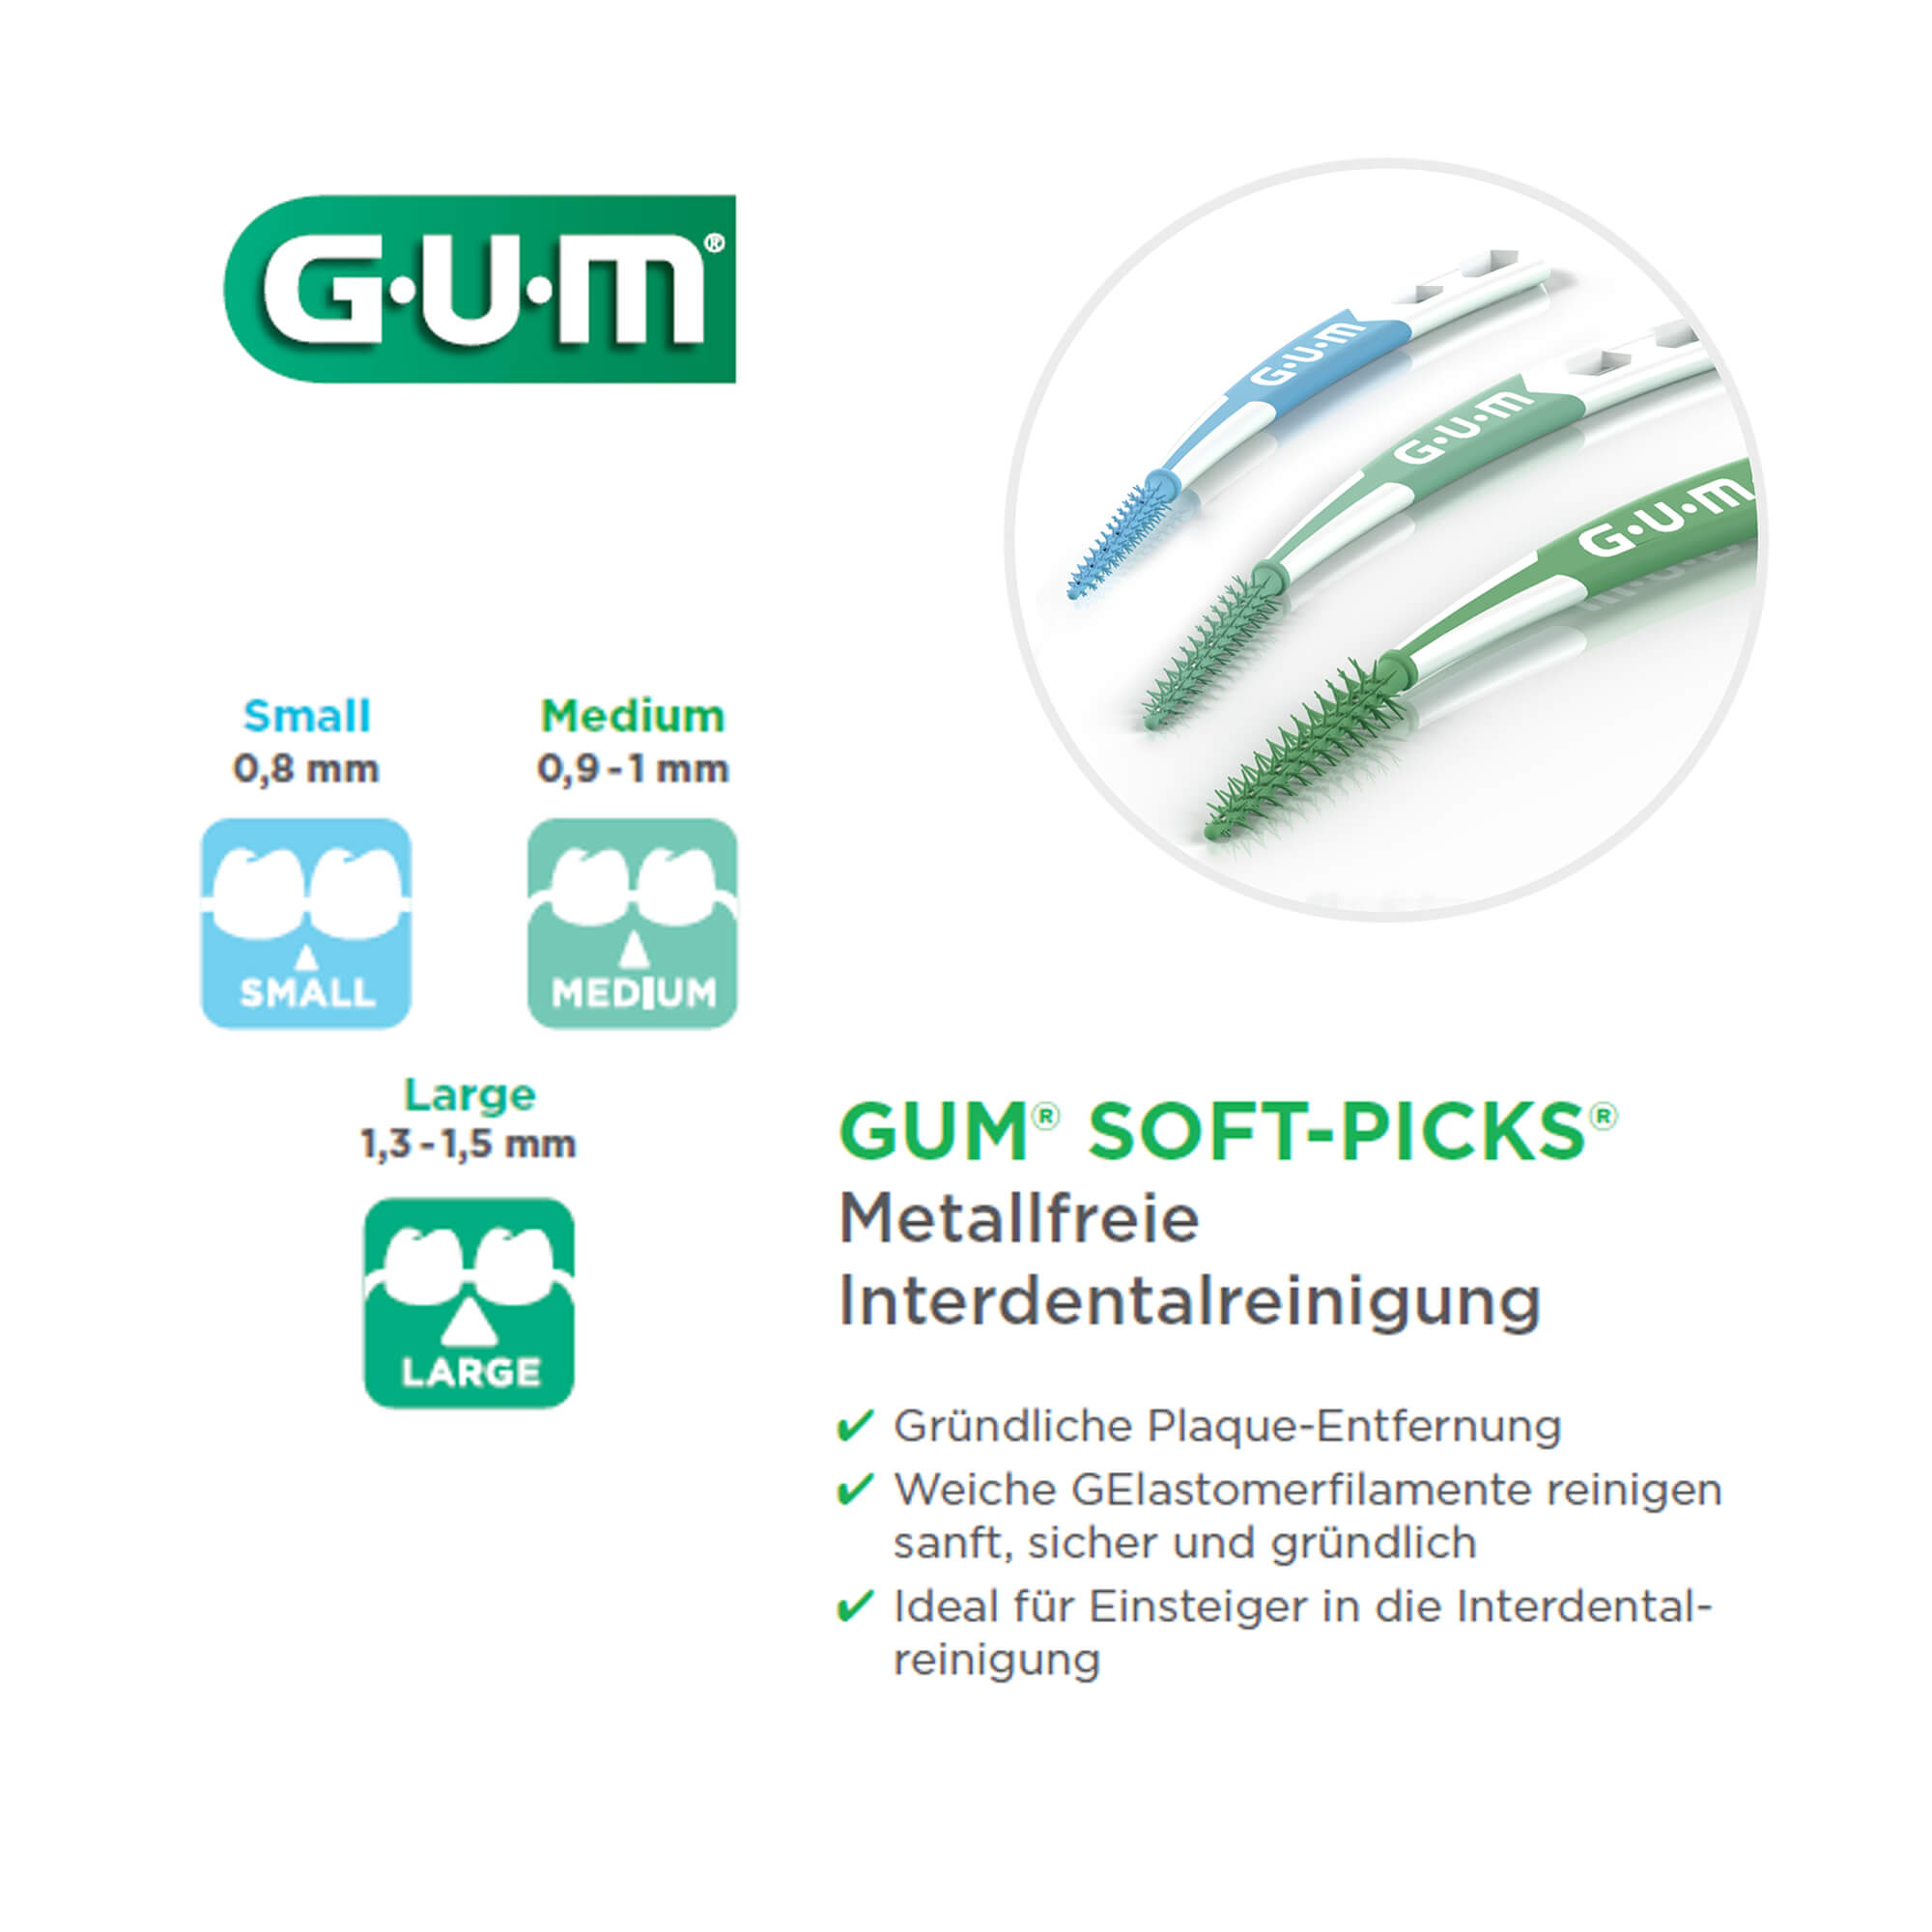 GUM Soft-Picks PRO Interdentalbüsten-Sortiment